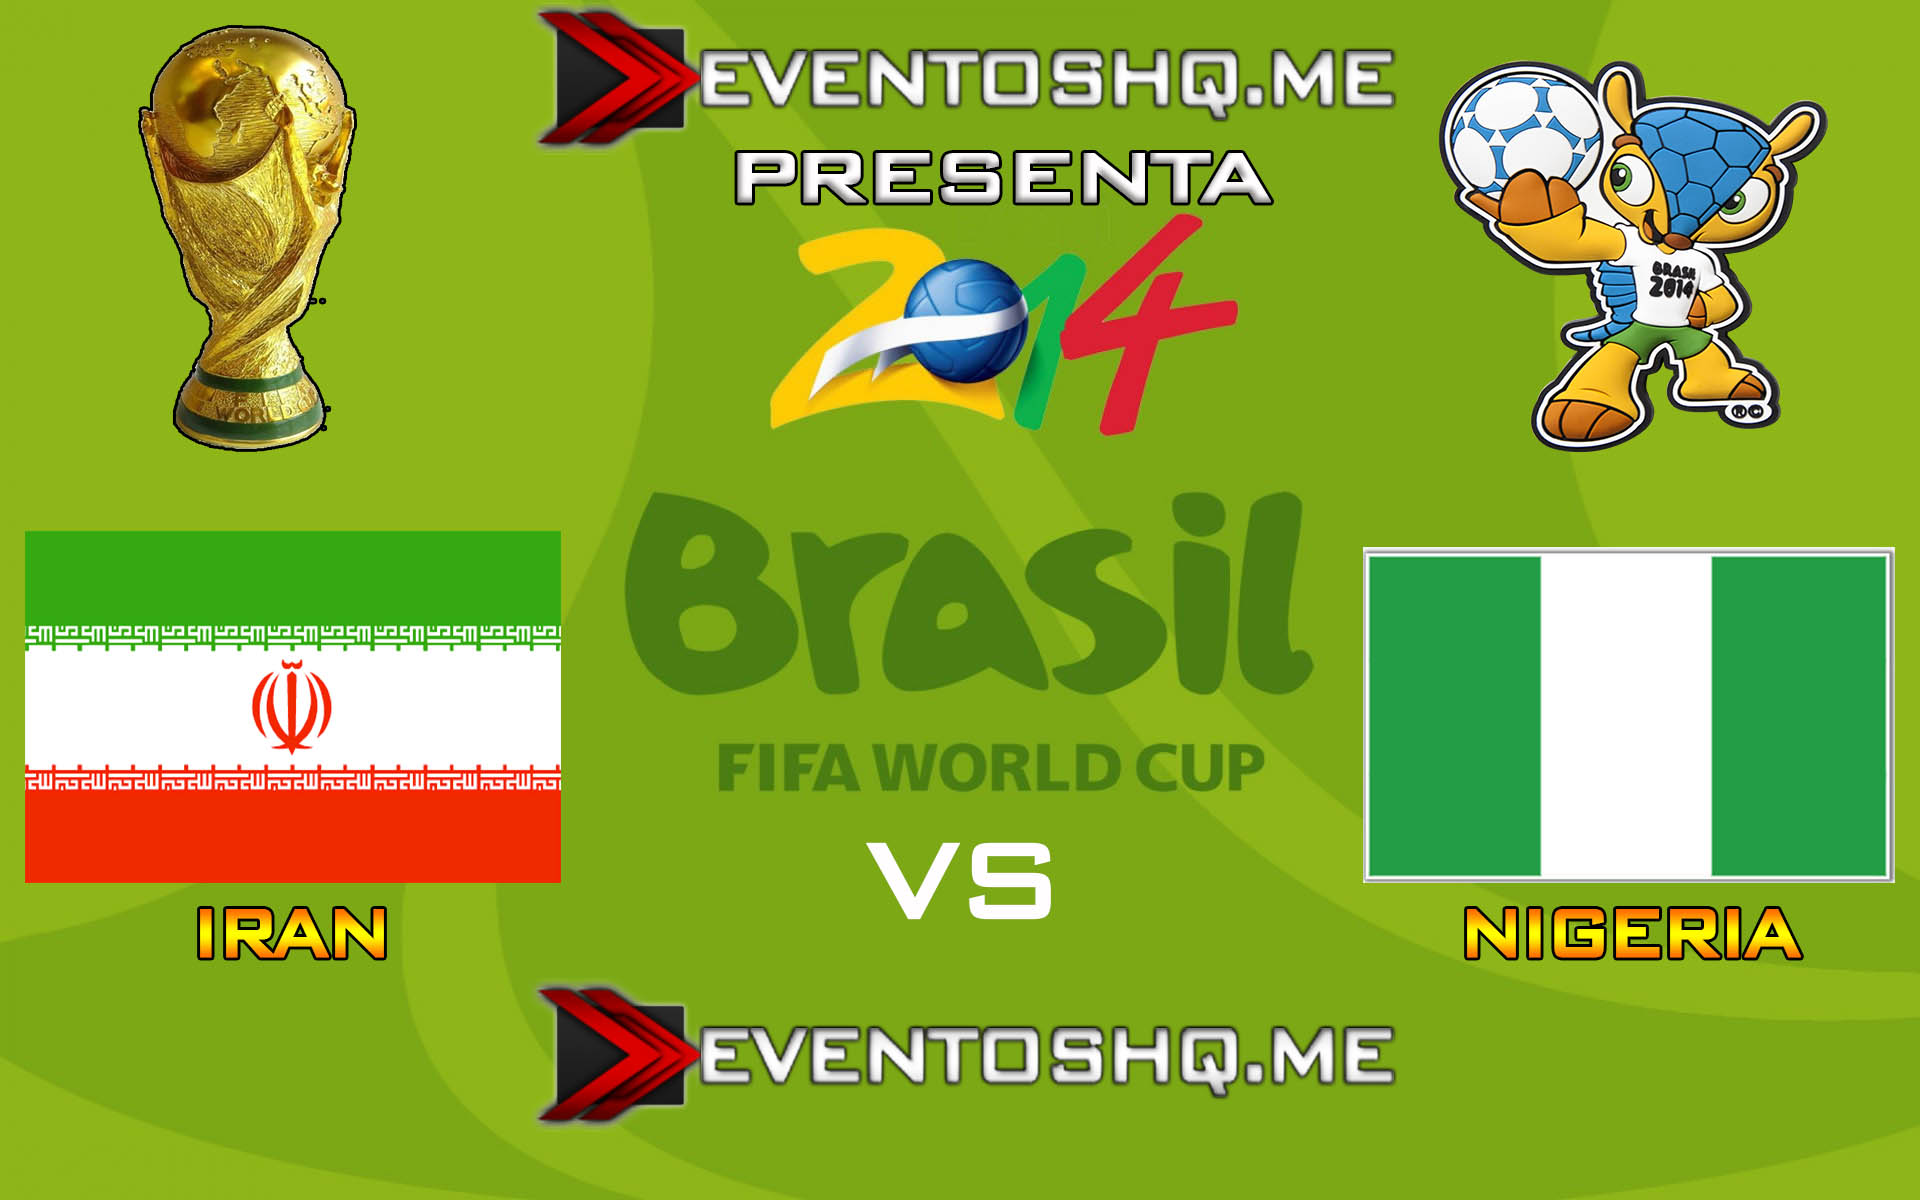 Ver en Vivo Iran vs Nigeria Mundial Brasil 2014 www.eventoshq.me